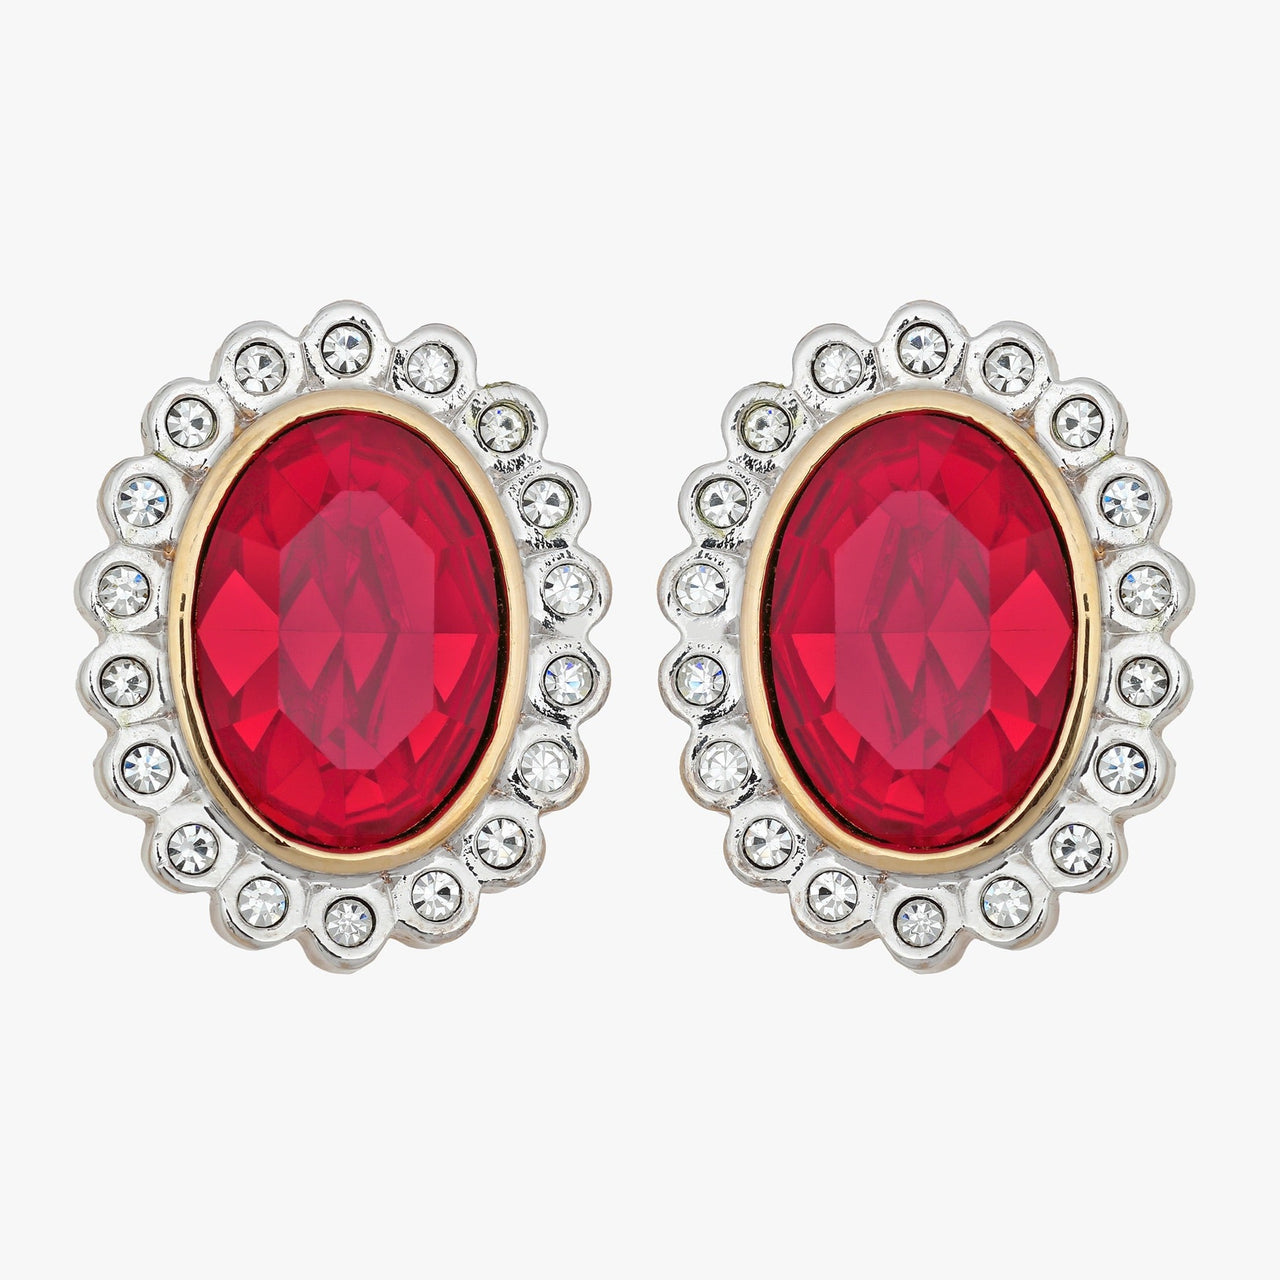 Red rhinestone clip earrings